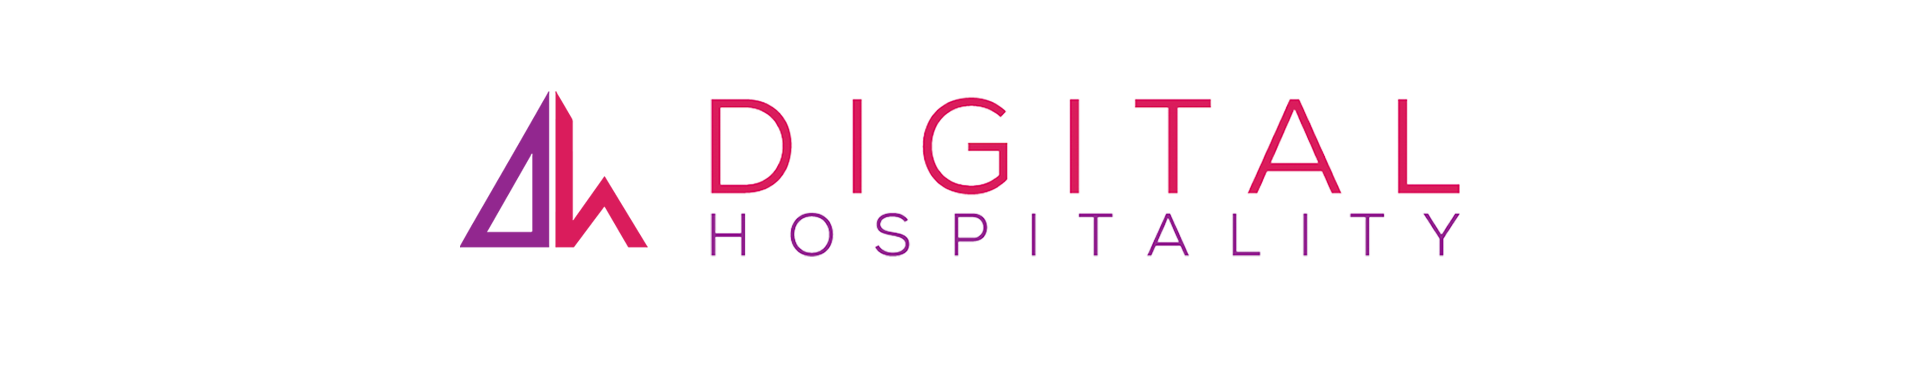 Digital Hospitality